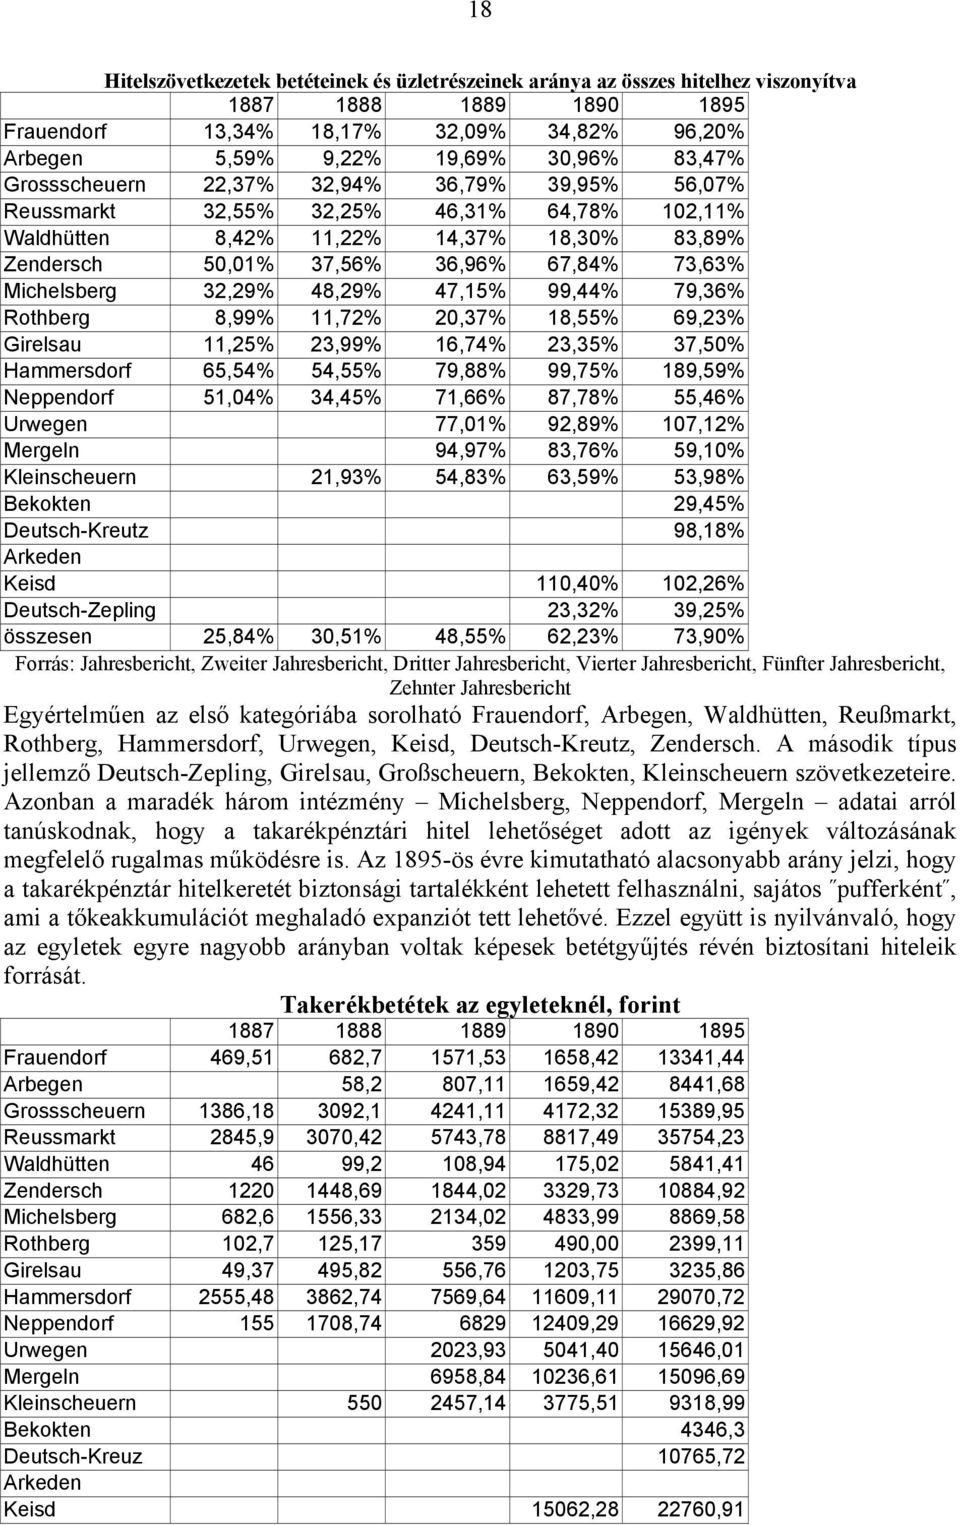 Michelsberg 32,29% 48,29% 47,15% 99,44% 79,36% Rothberg 8,99% 11,72% 20,37% 18,55% 69,23% Girelsau 11,25% 23,99% 16,74% 23,35% 37,50% Hammersdorf 65,54% 54,55% 79,88% 99,75% 189,59% Neppendorf 51,04%